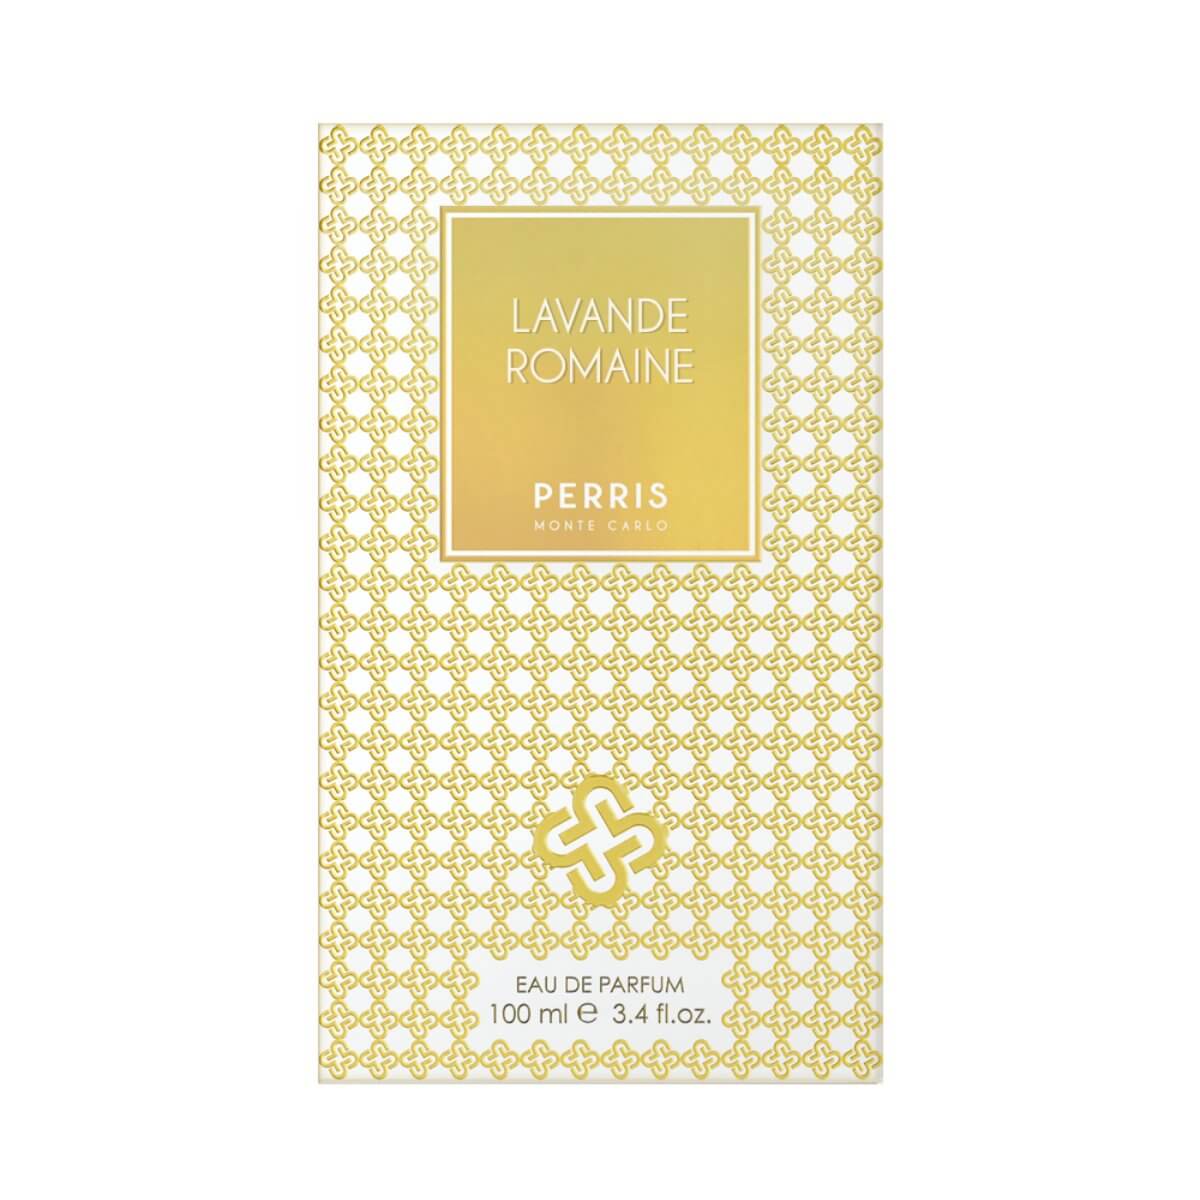 Lavande Romaine by Perris Monte Carlo at Indigo